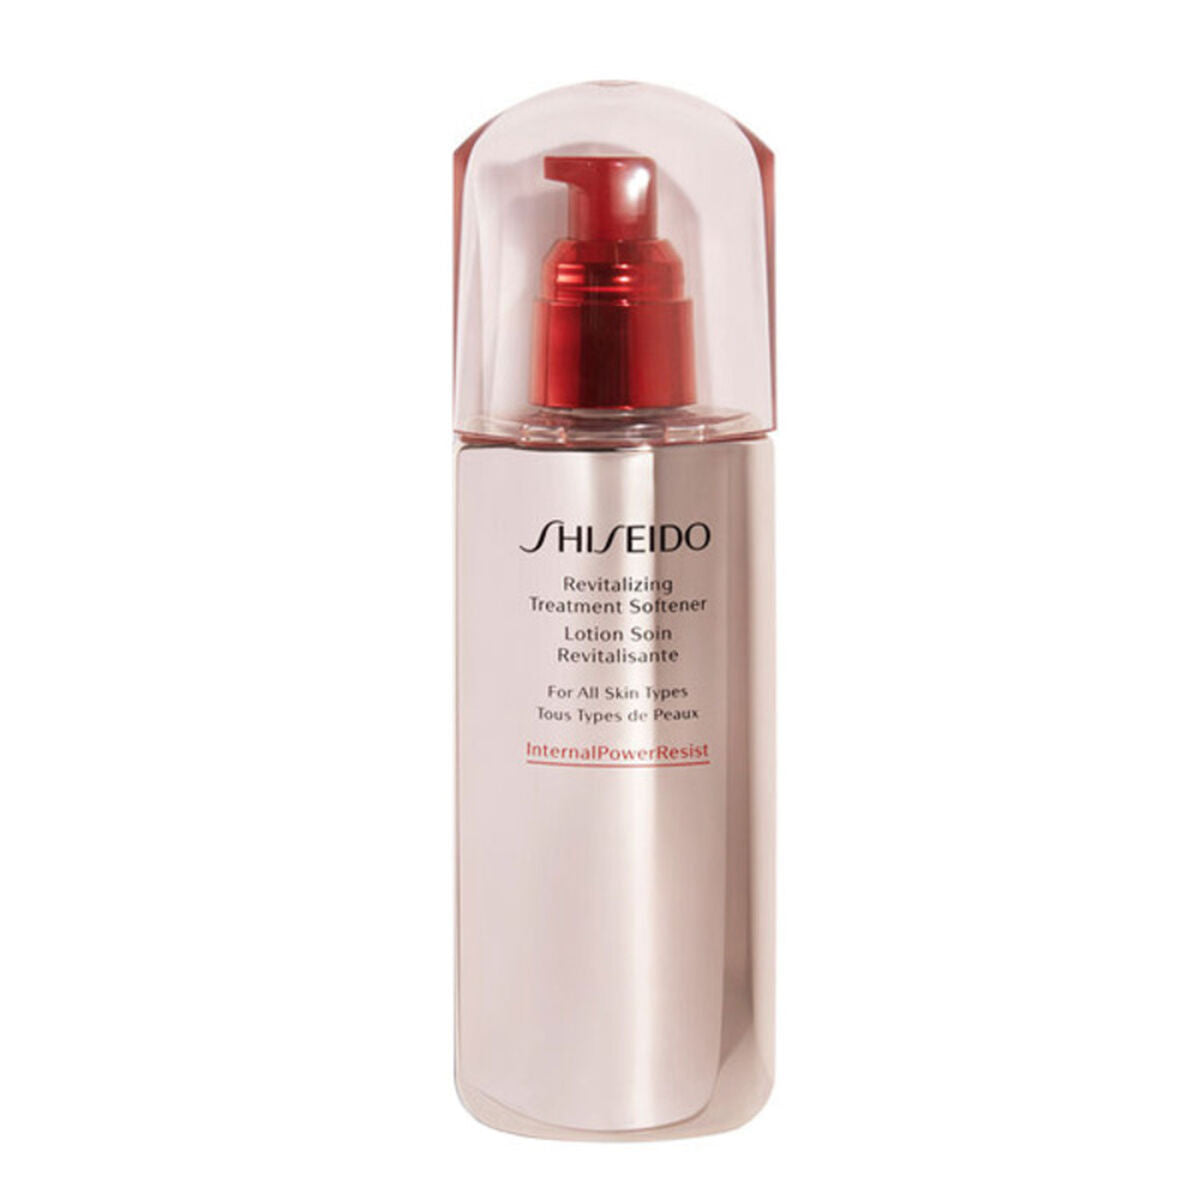 Anti-ageing Facial Toner Defend Skincare Shiseido | Shiseido | Aylal Beauty